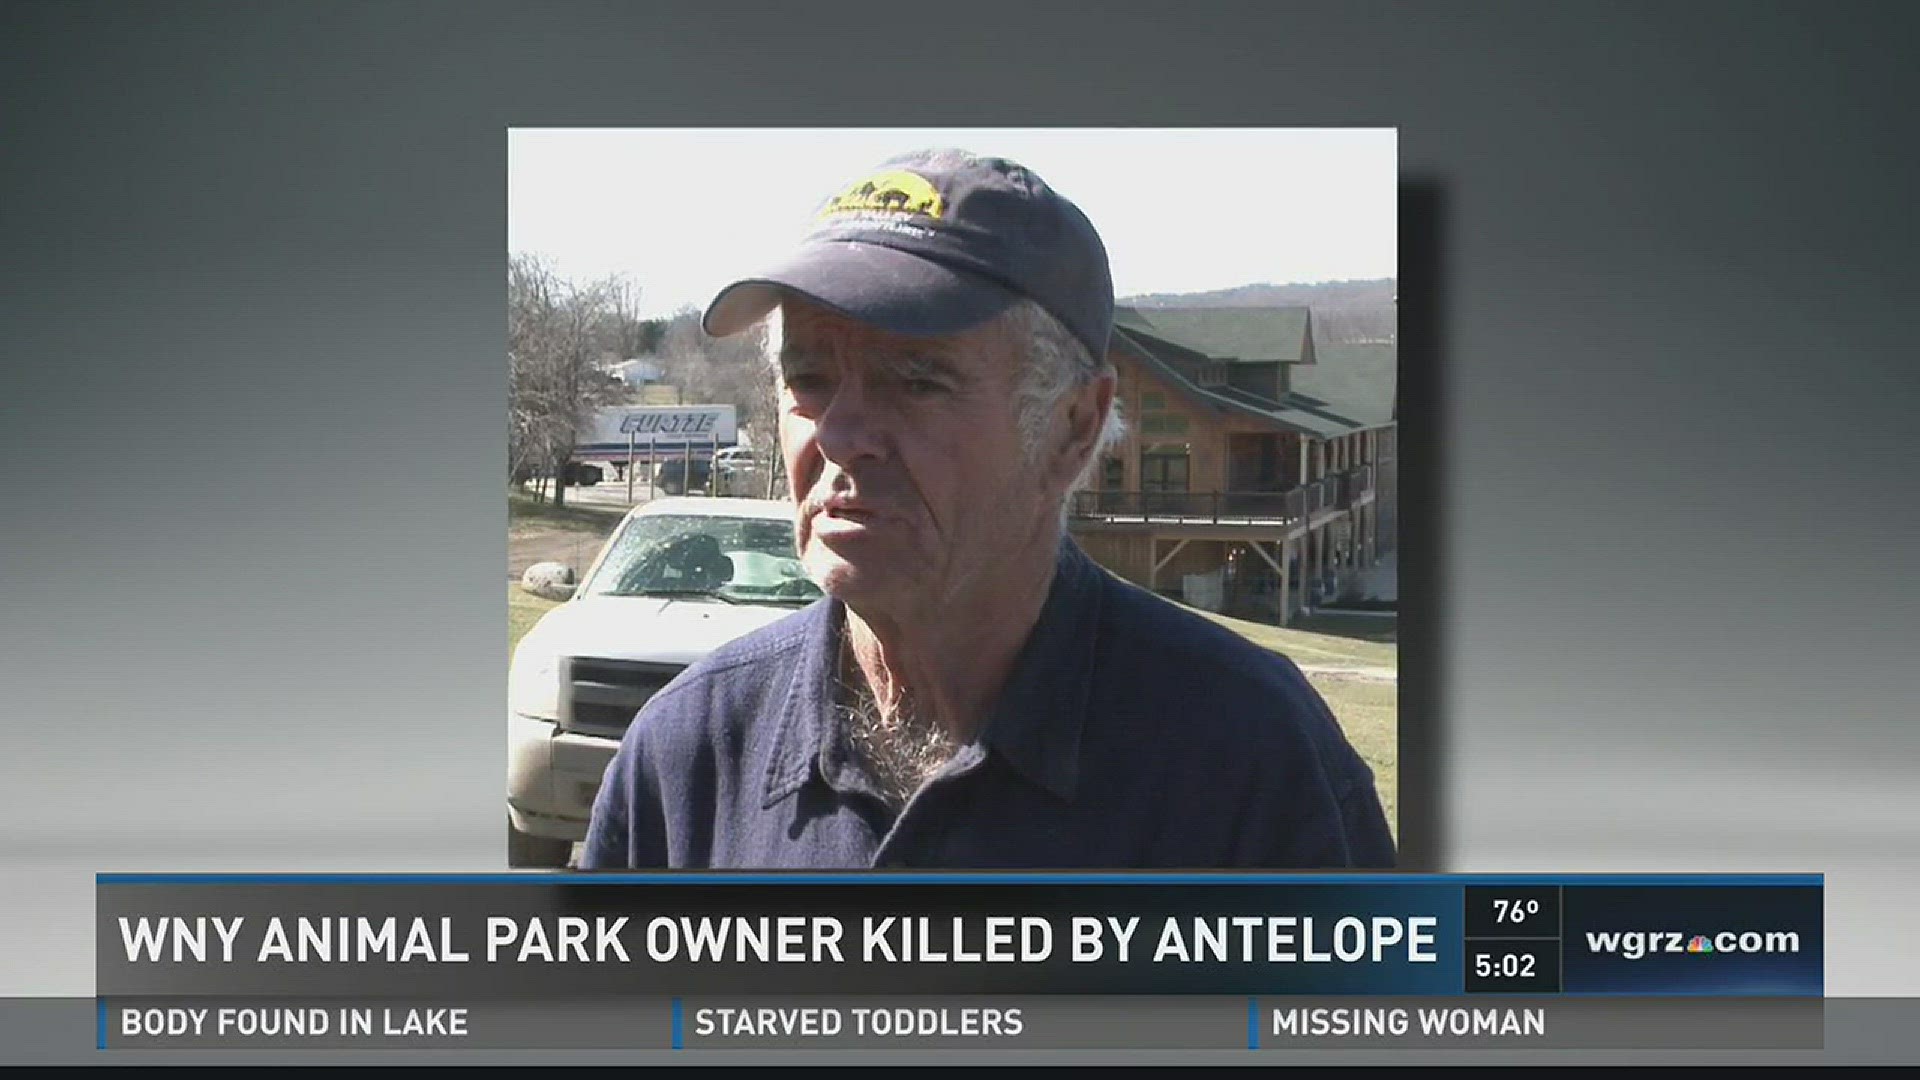 WNY Animal Park Owner Killed By Antelope